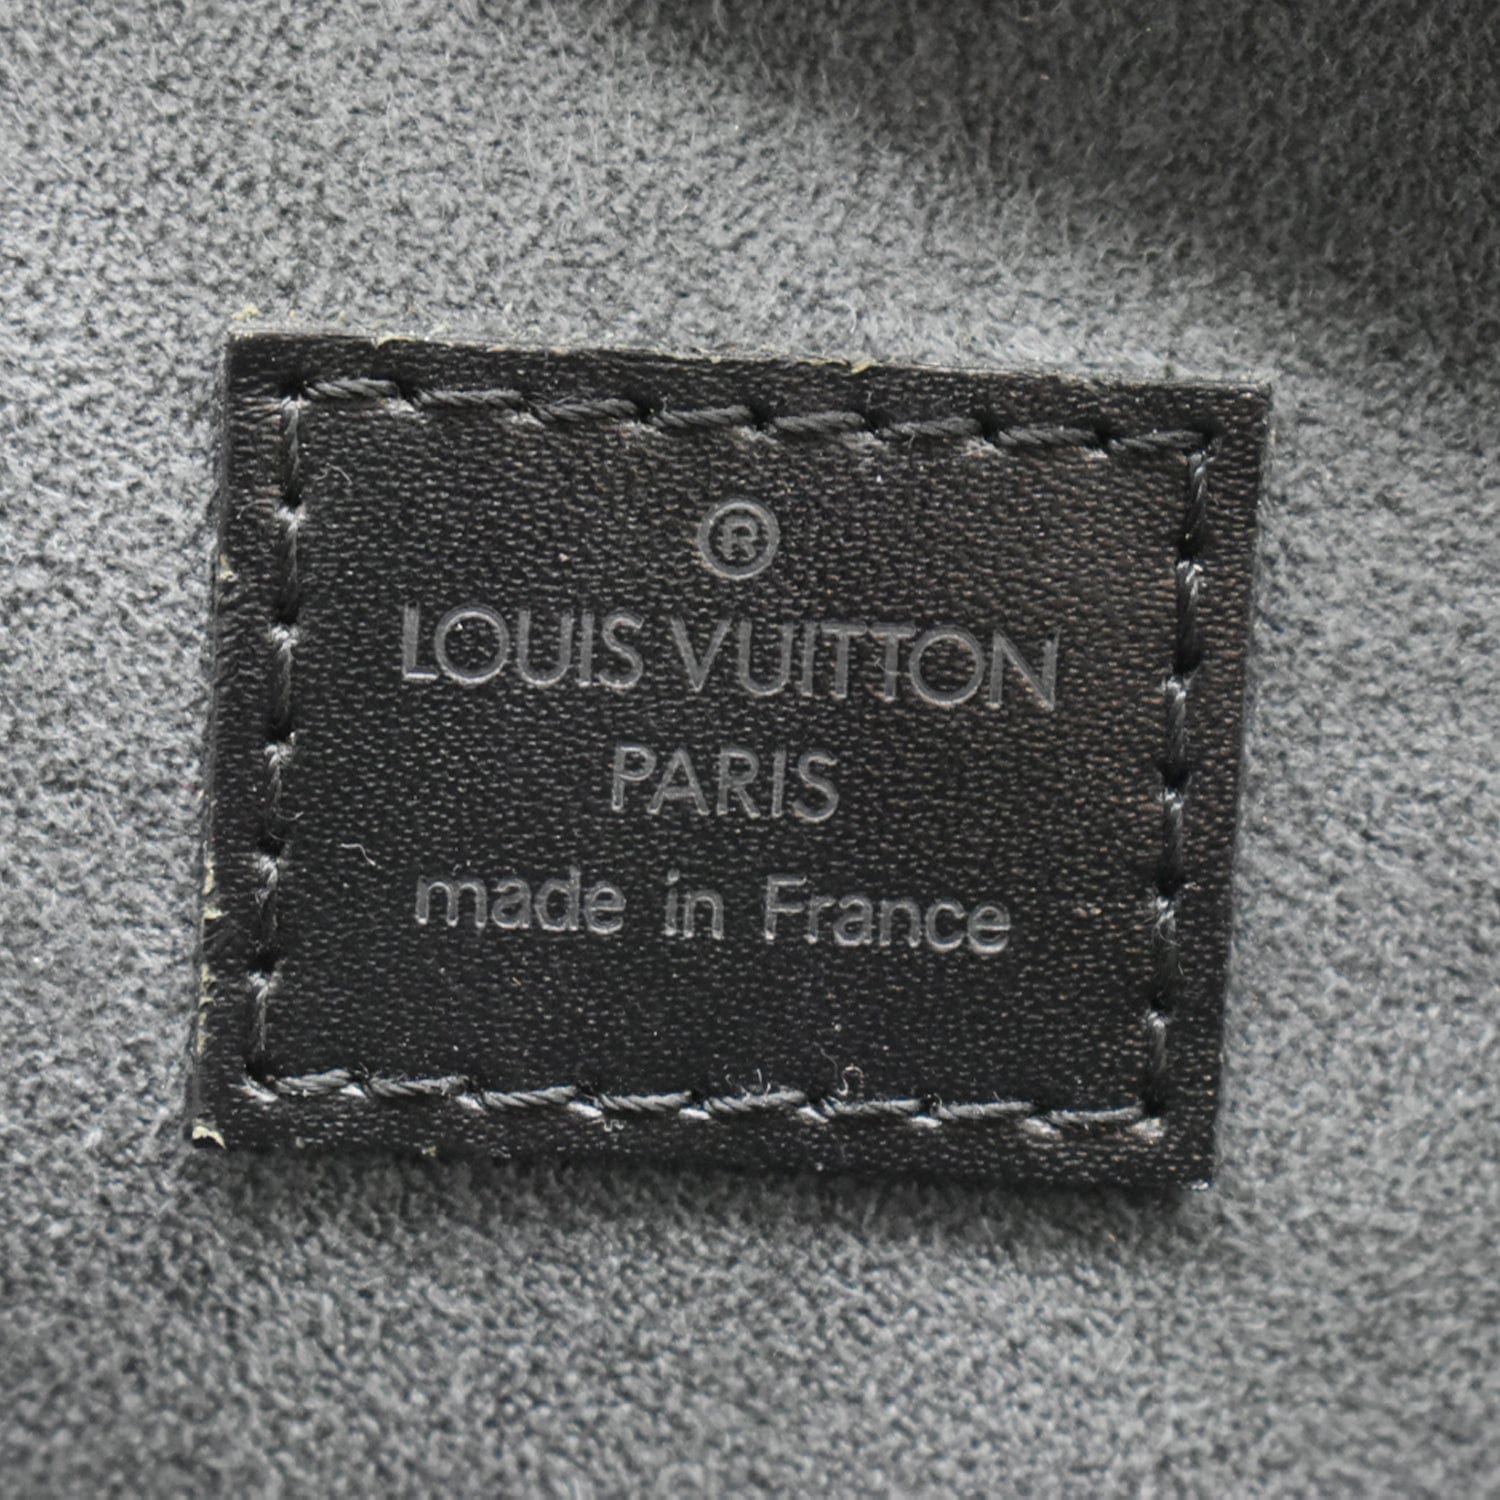 Louis Vuitton VUITTON JASMINE M HANDBAG5208B IN EPI LEATHER LILAC